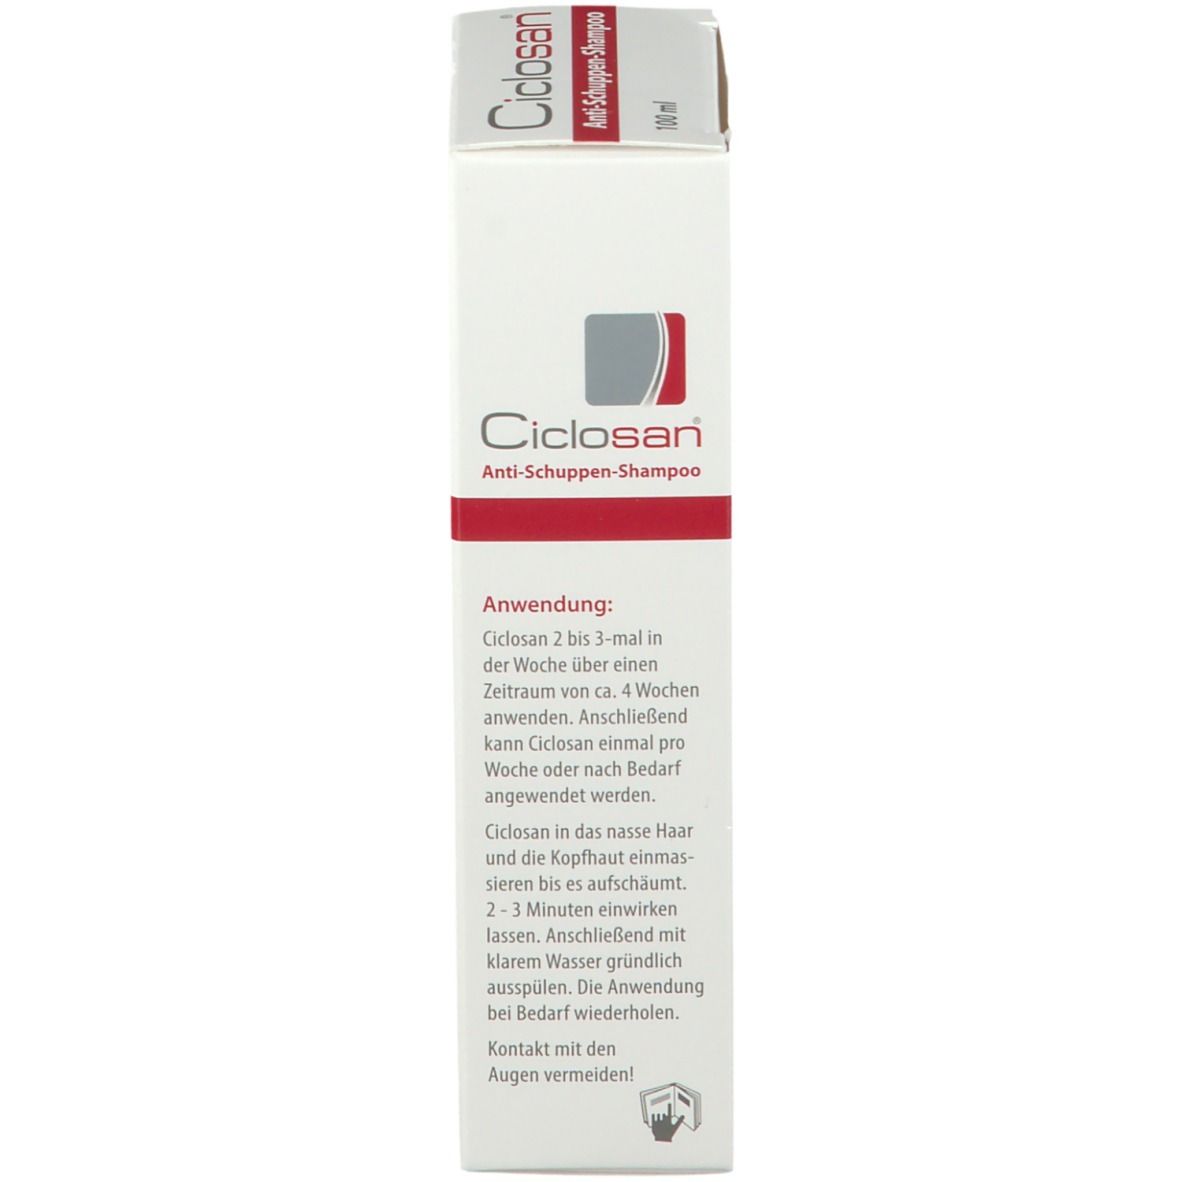 Ciclosan® Anti-Schuppen-Shampoo